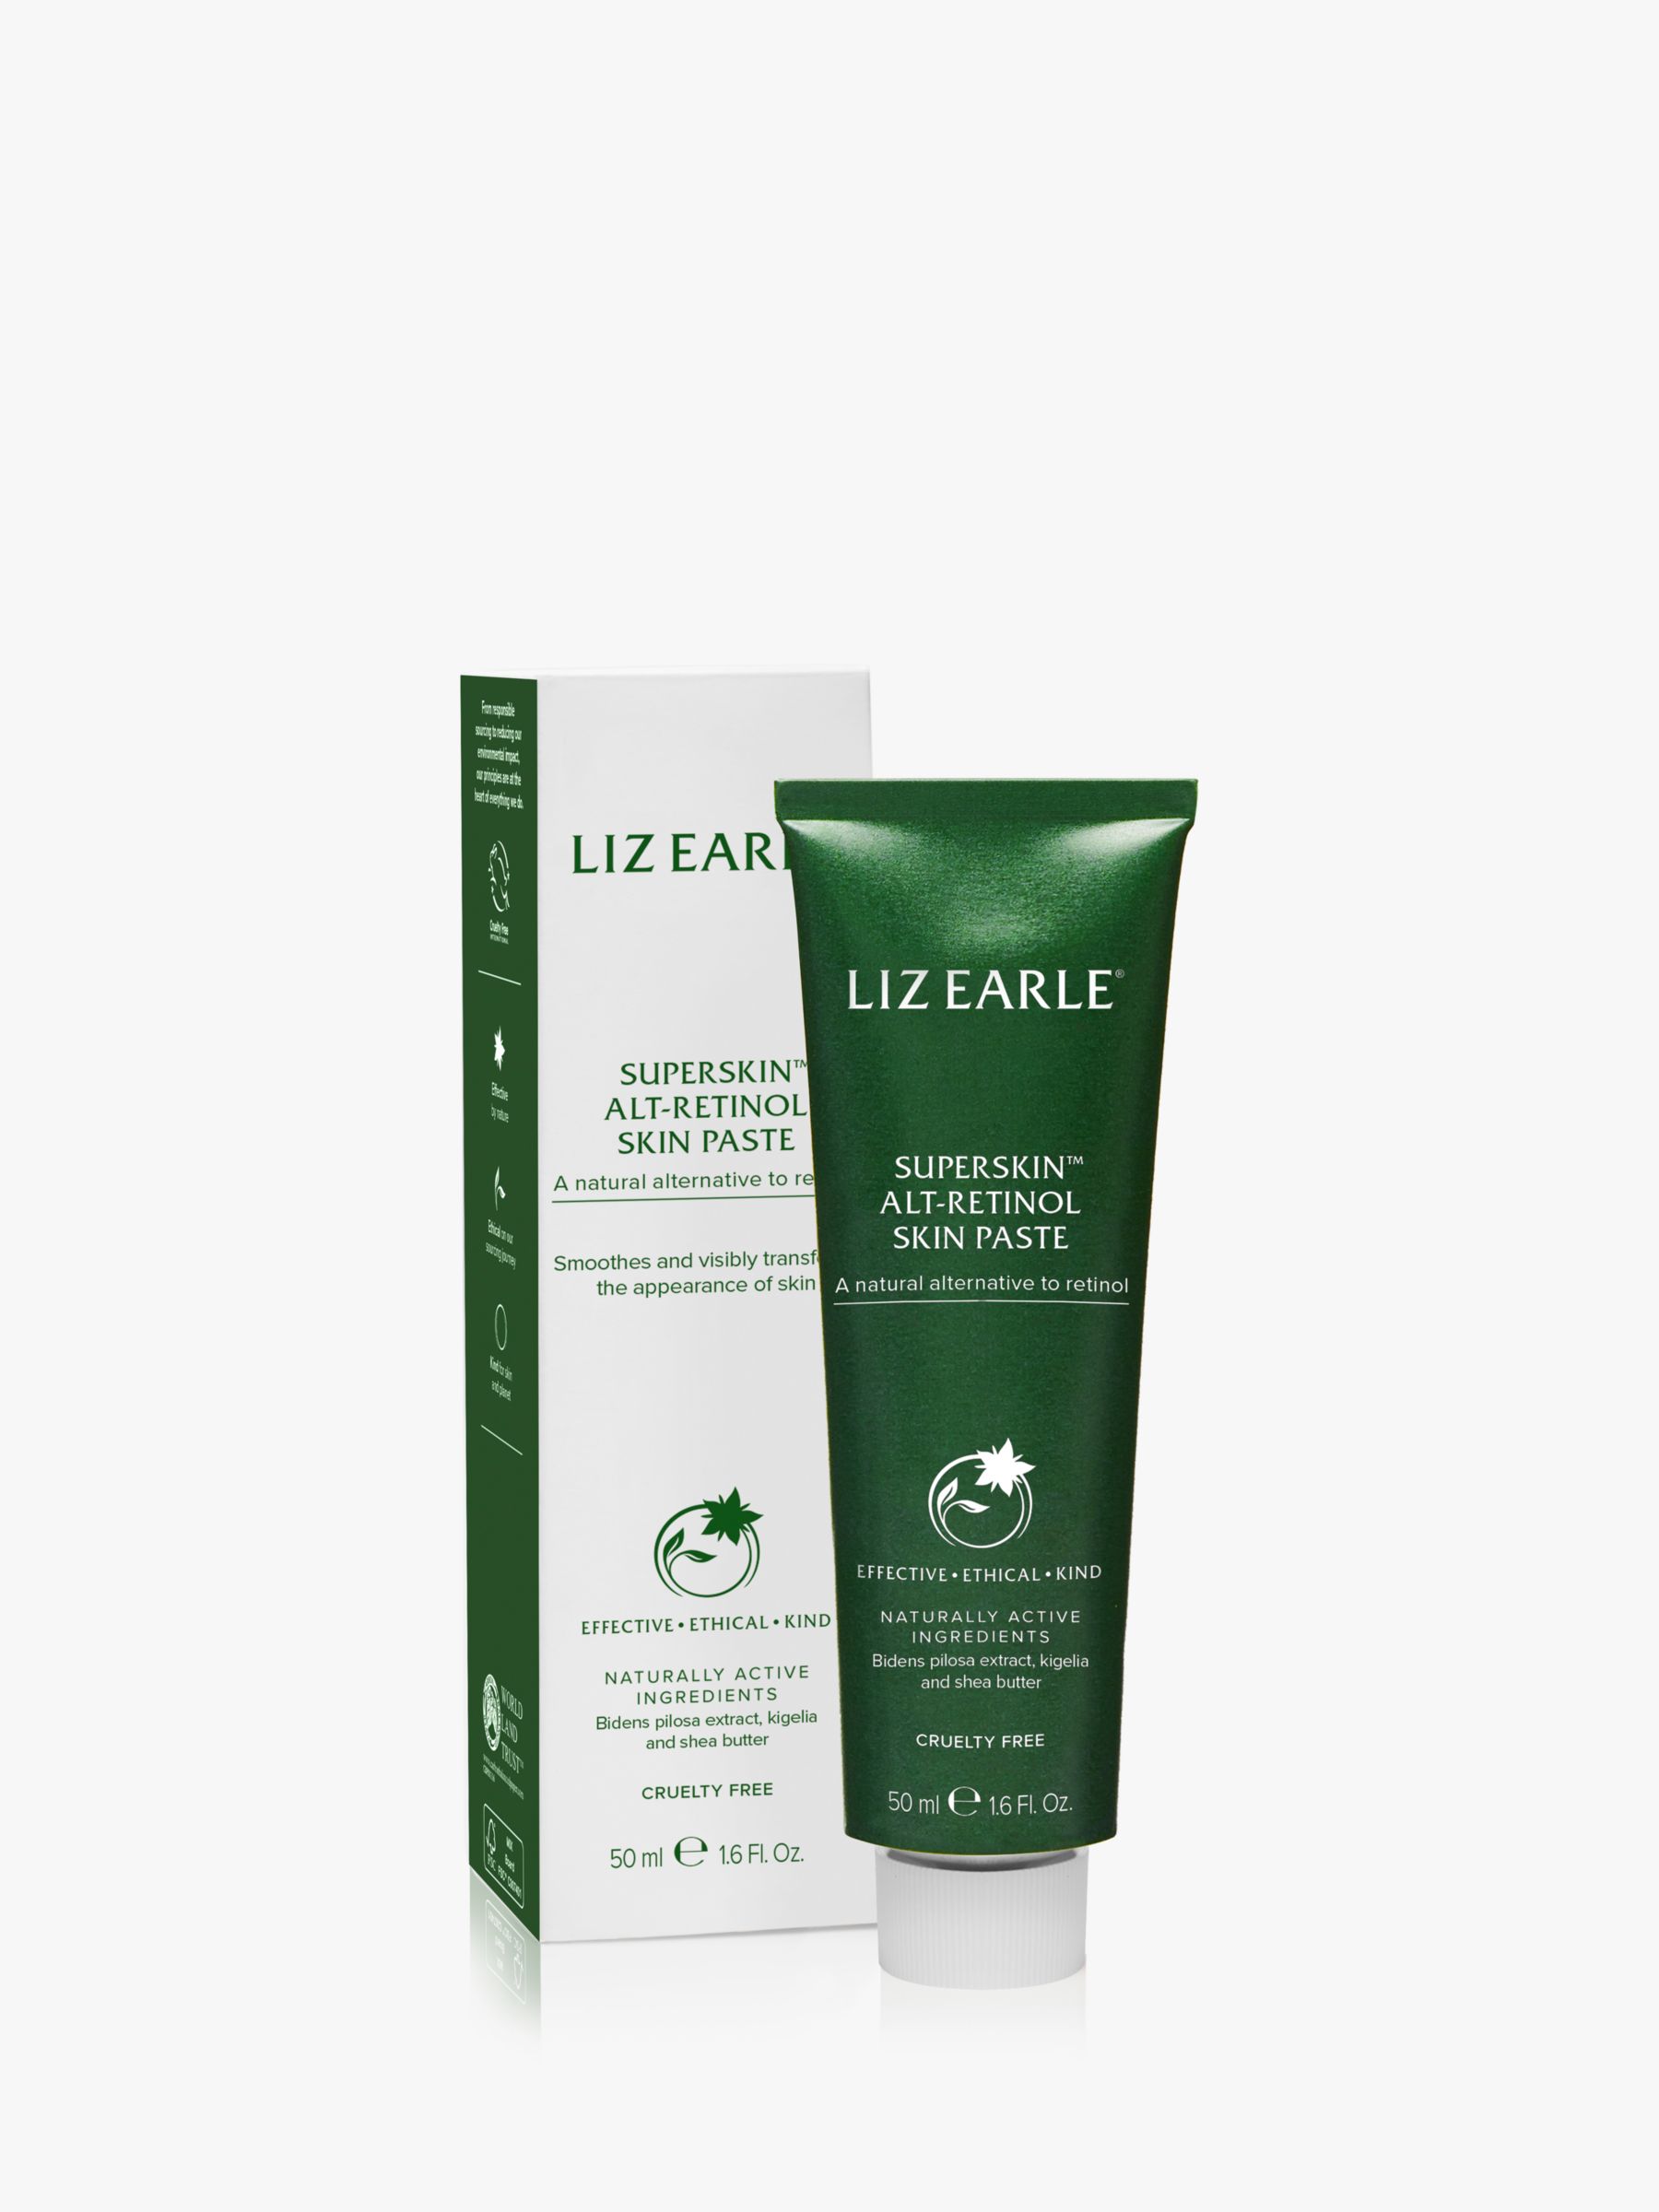 Liz Earle Superskin™ Alt-Retinol Skin Paste, 50ml 2